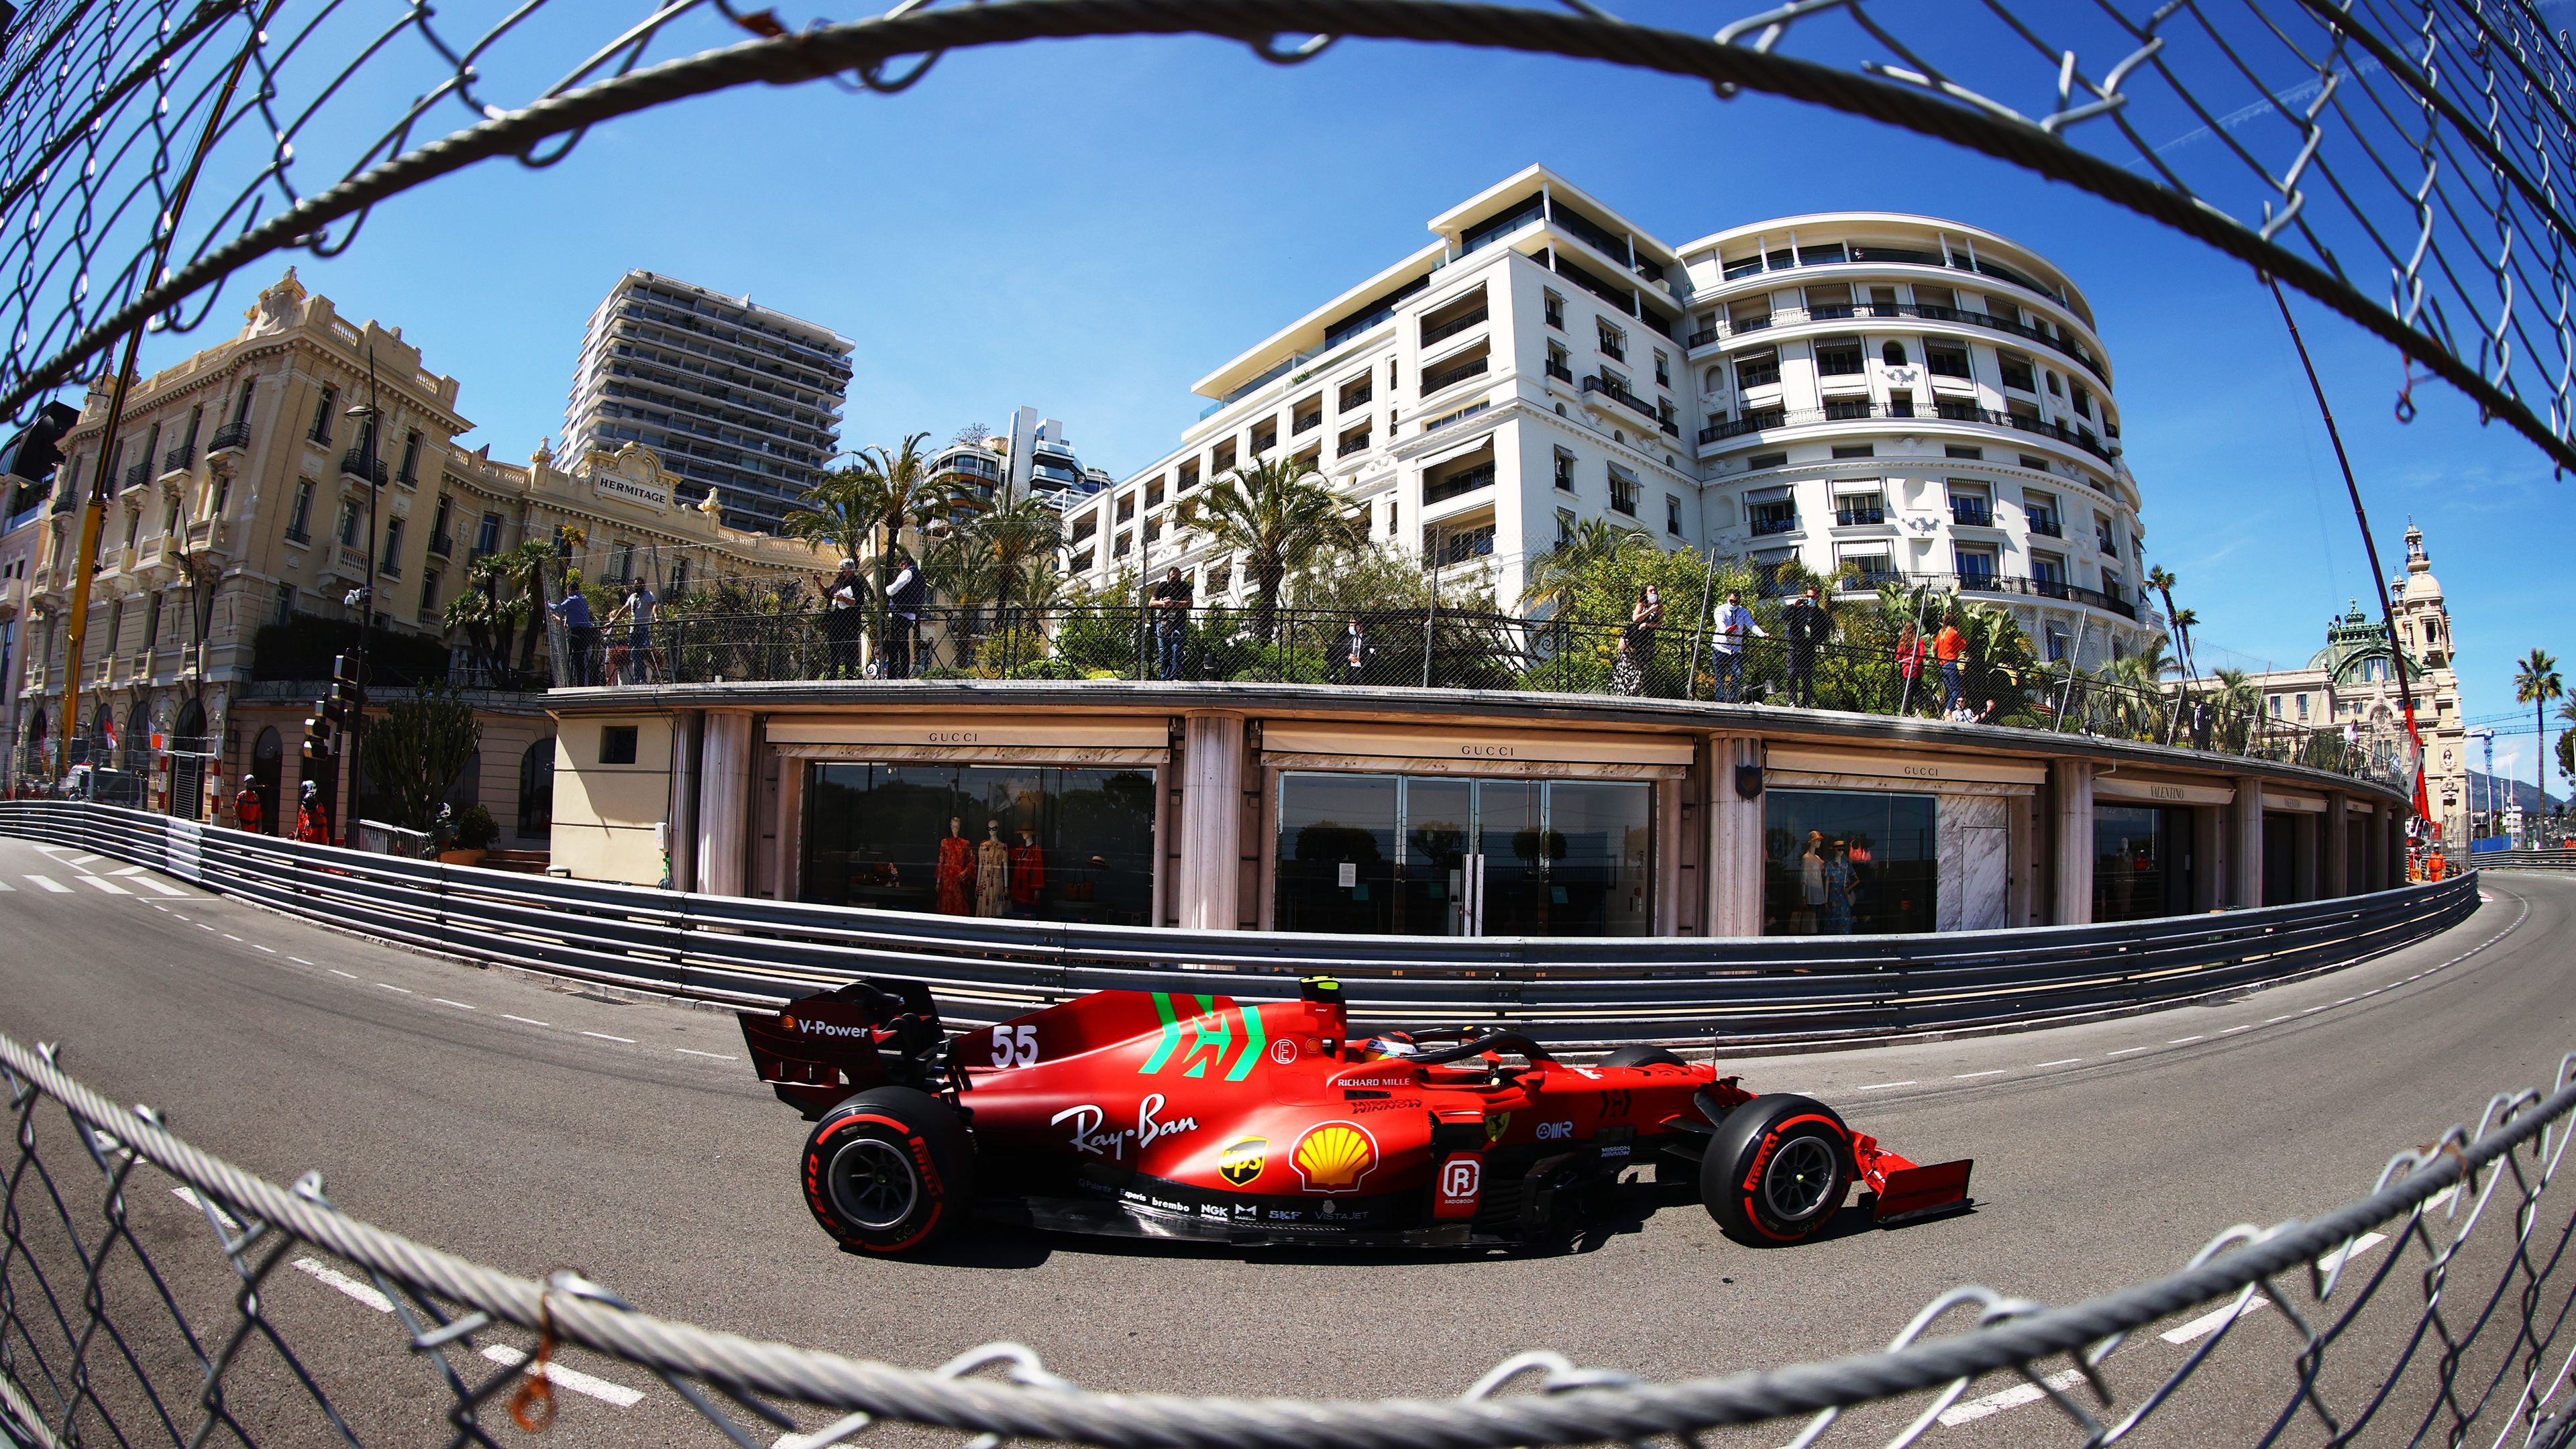 Monaco Grand Prix live stream: How to watch live online | Tom's Guide